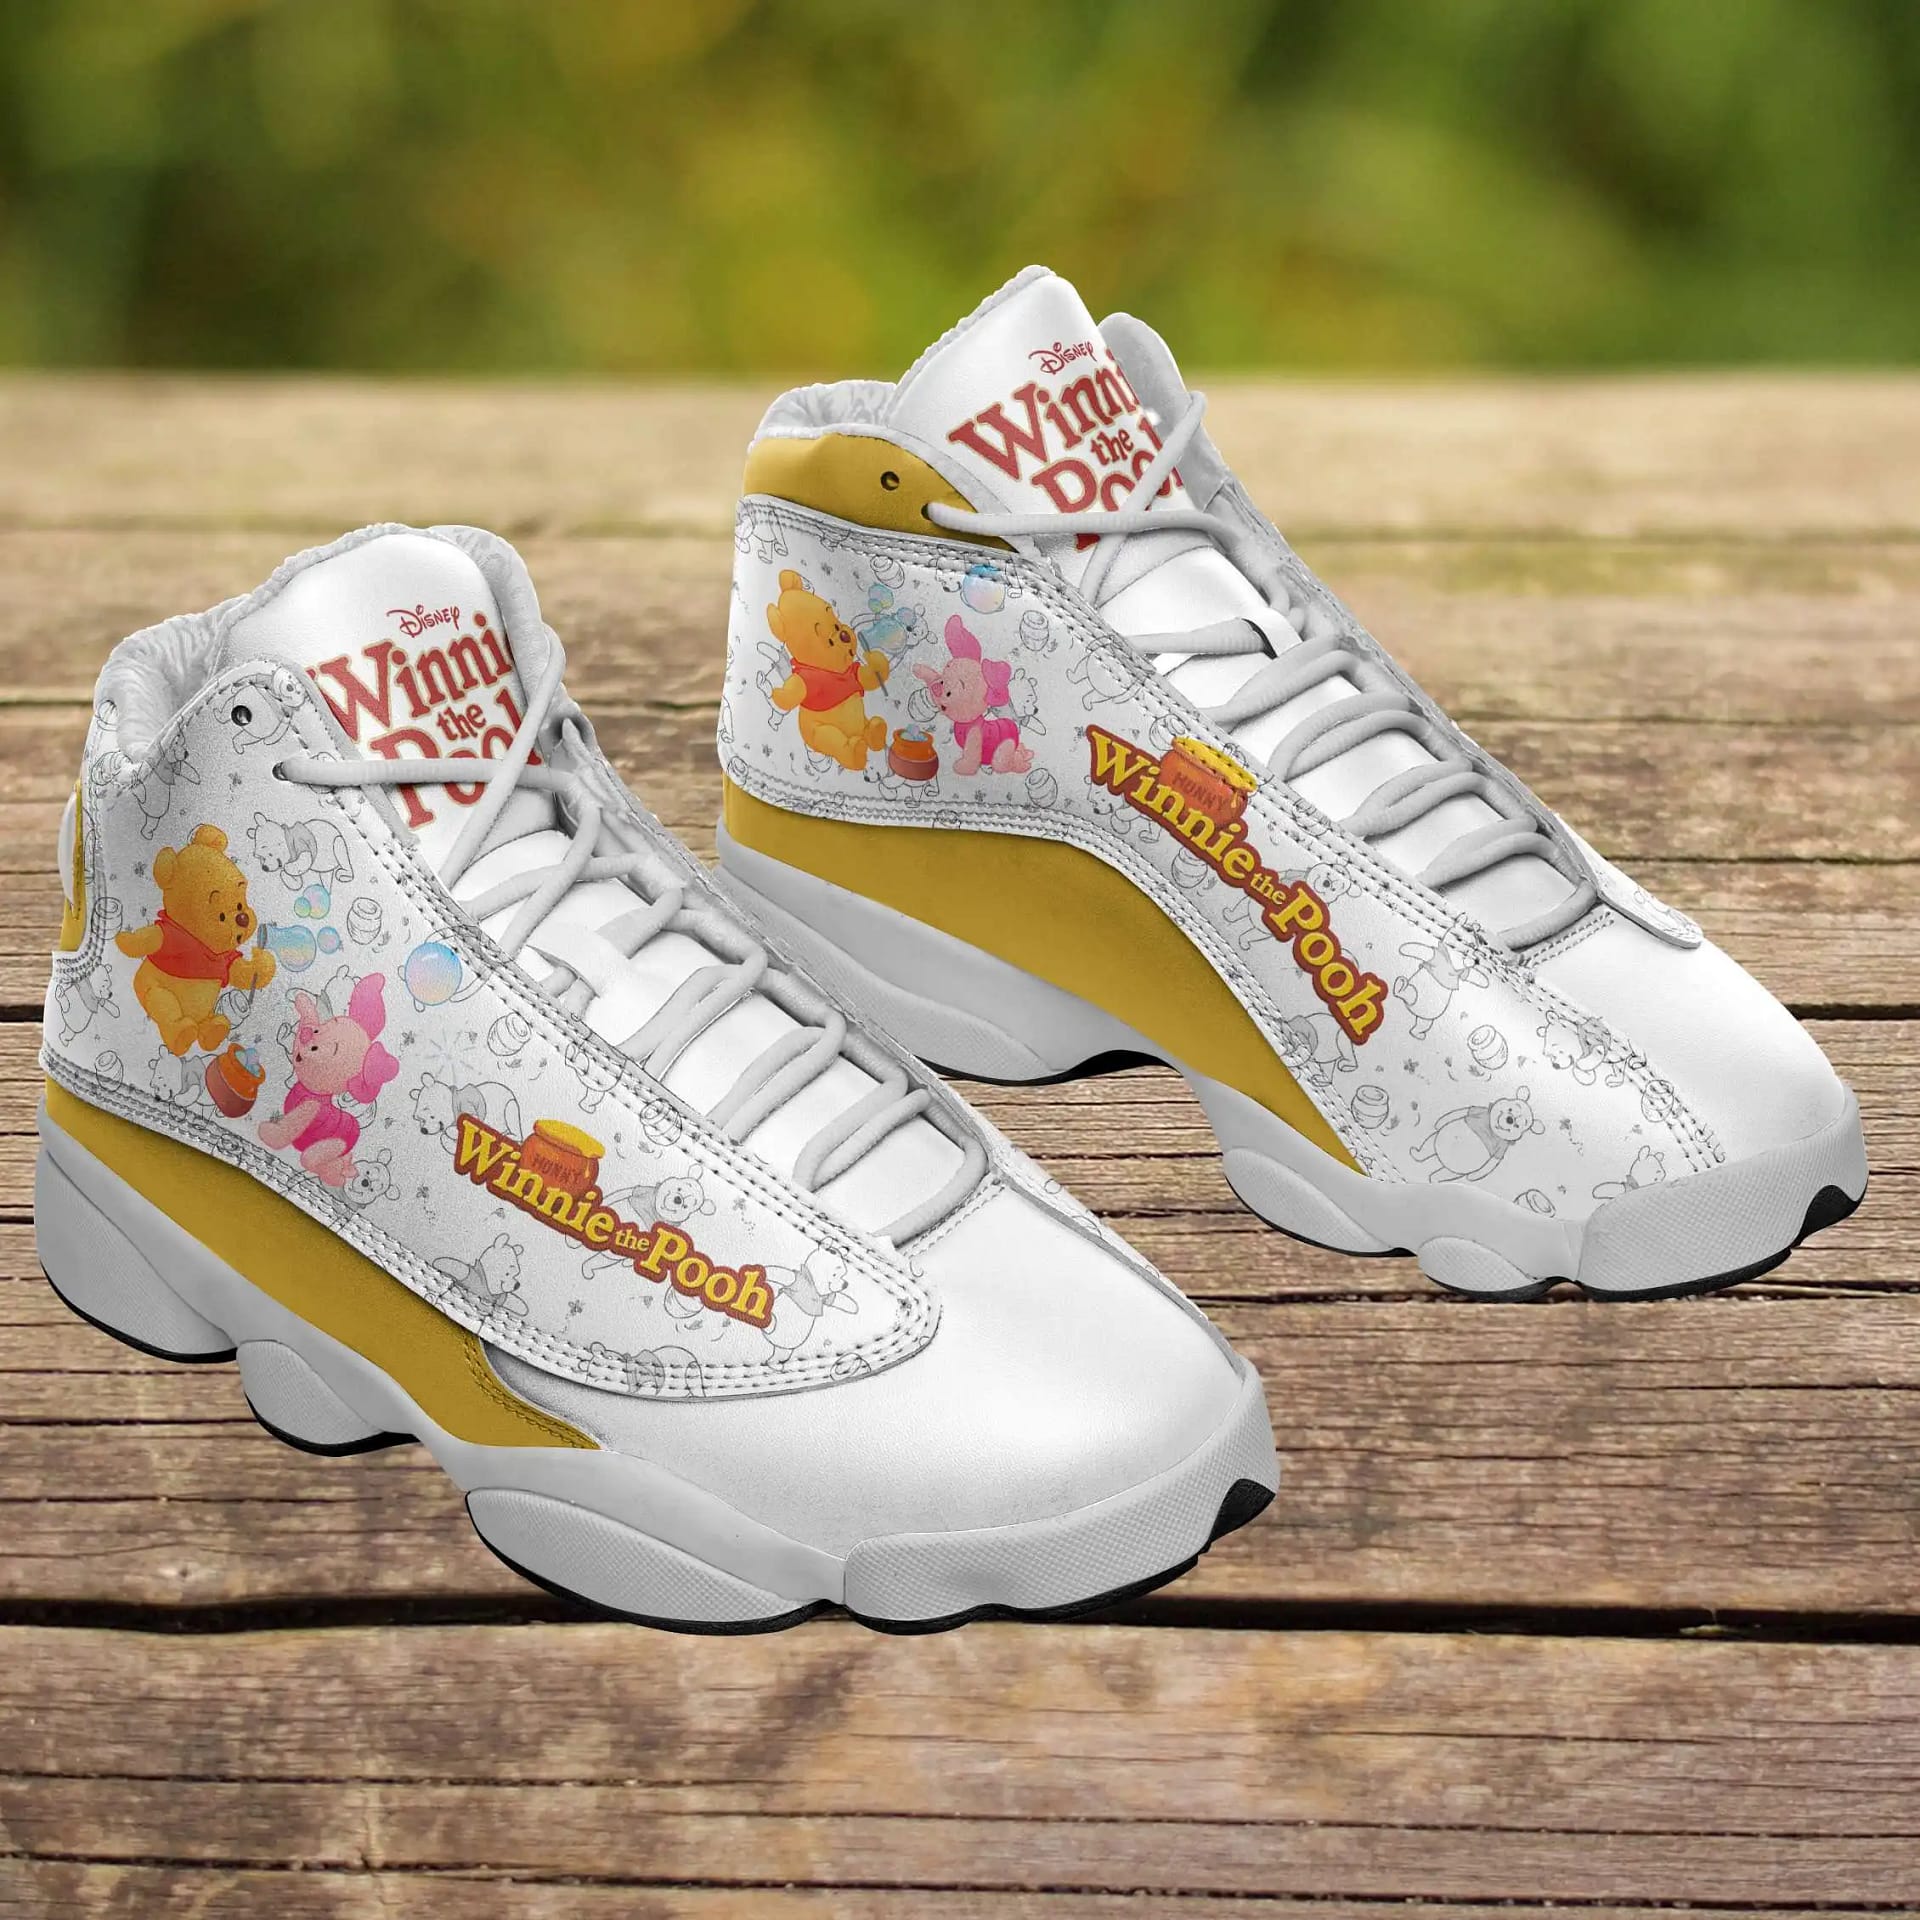 Disney Winnie The Pooh Air Jordan Shoes